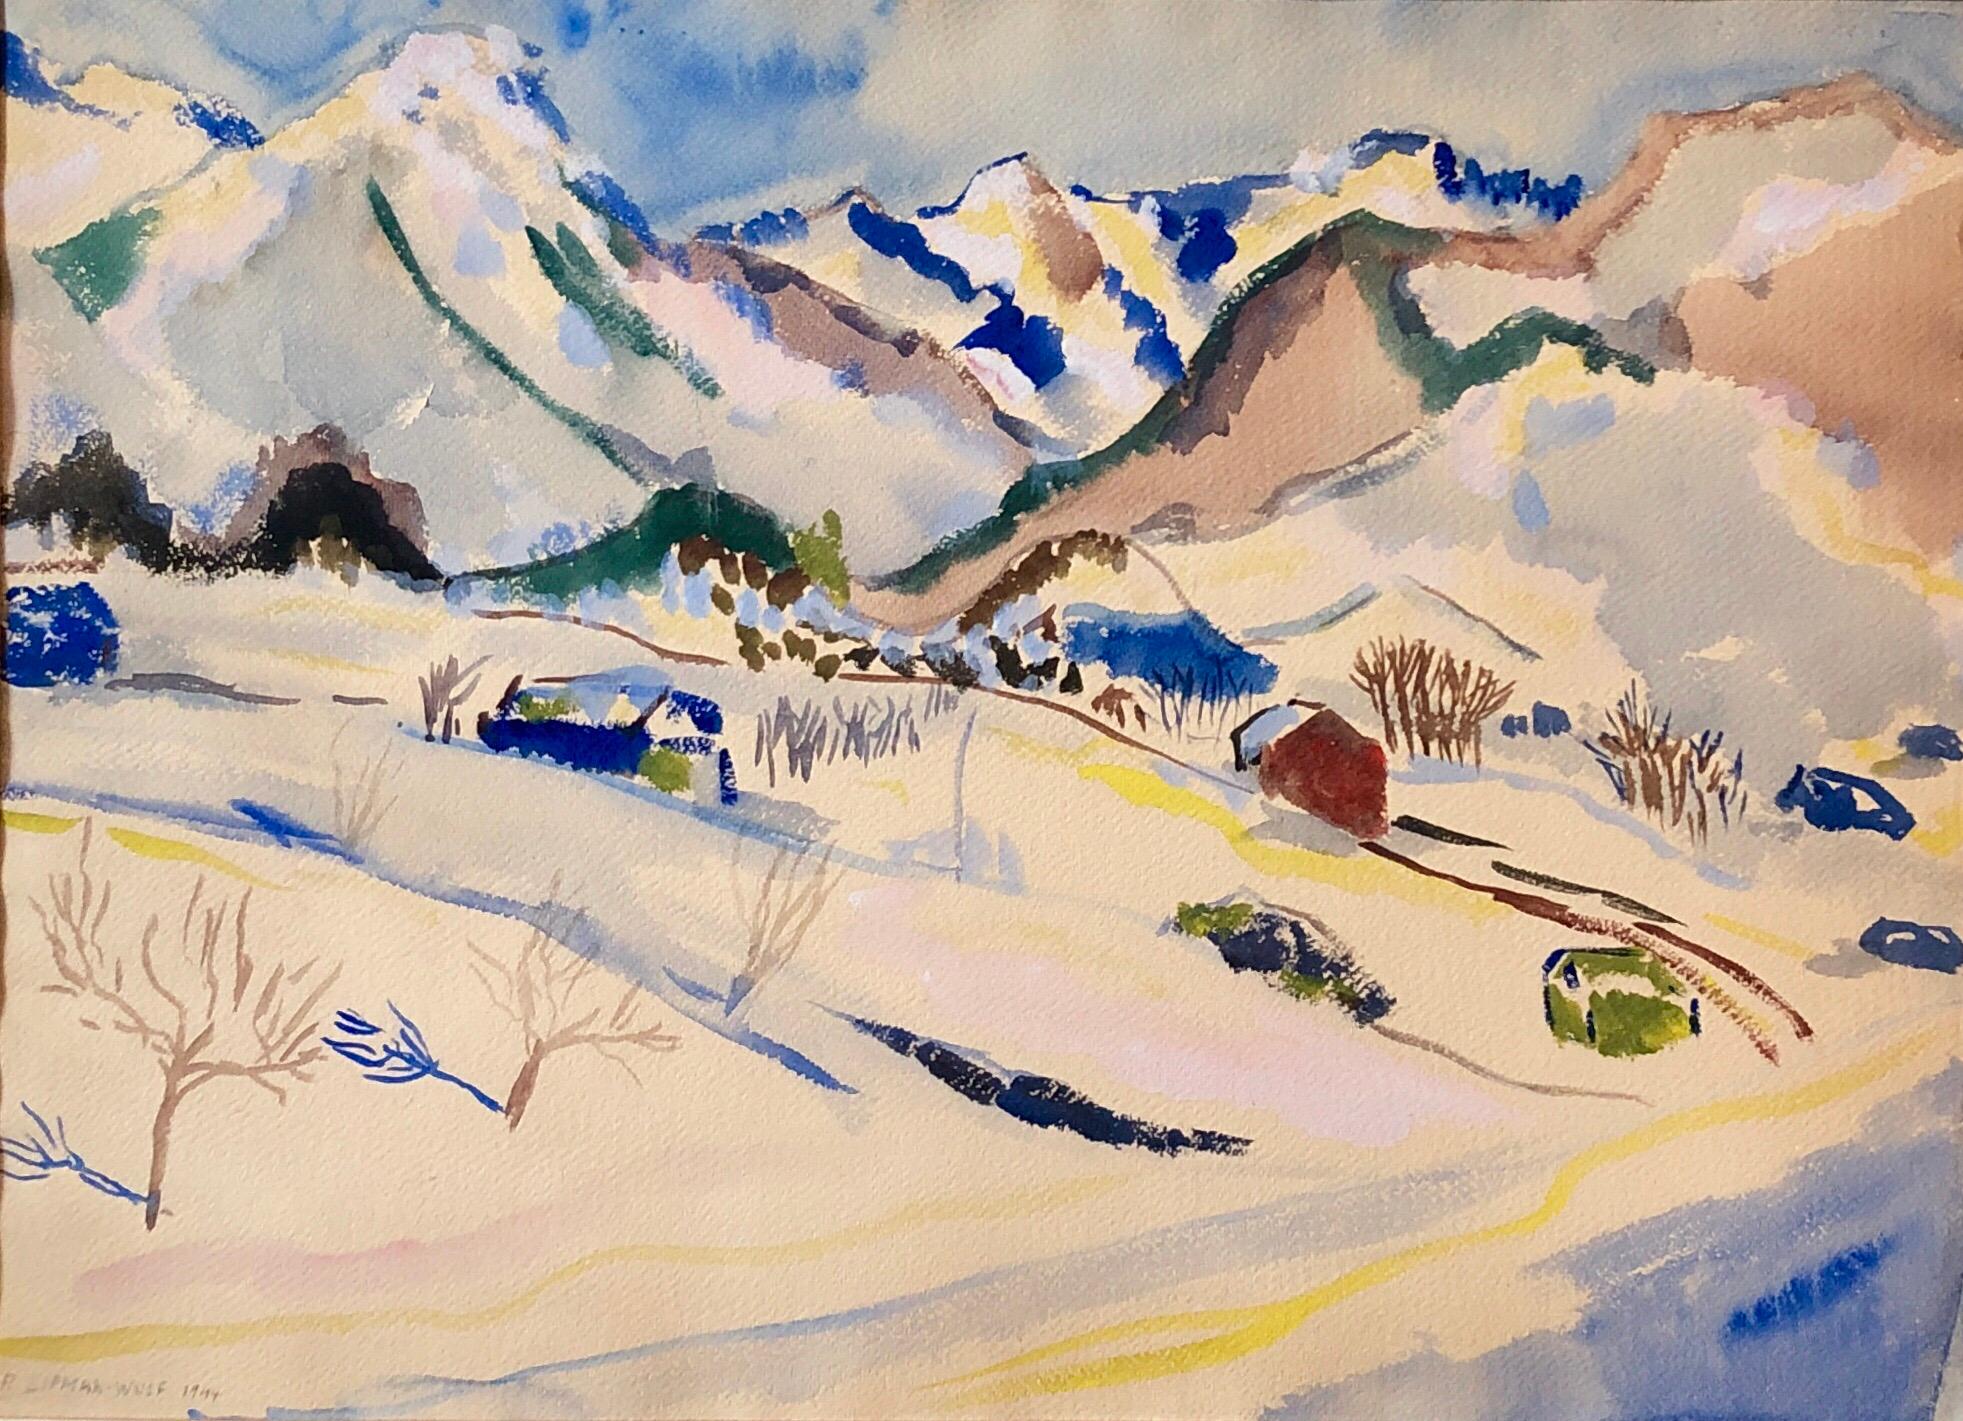 Peter Lipman Wulf Landscape Art - Swiss Alps Modernist Mountain Landscape 1944 Watercolor Painting Switzerland